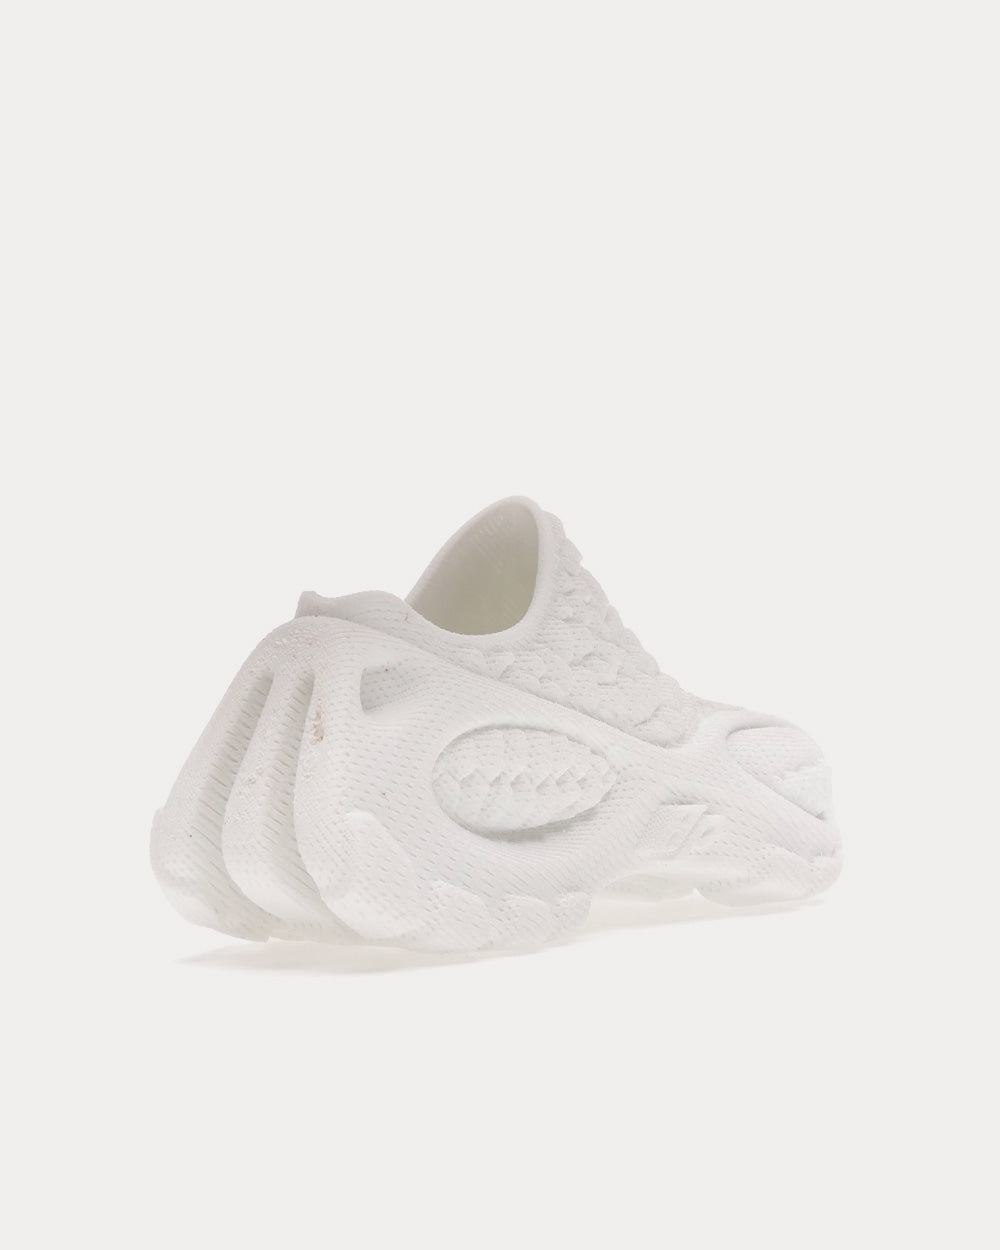 Heron Preston x Zellerfeld - HERON01 - 0.8 BETA White Slip On Sneakers